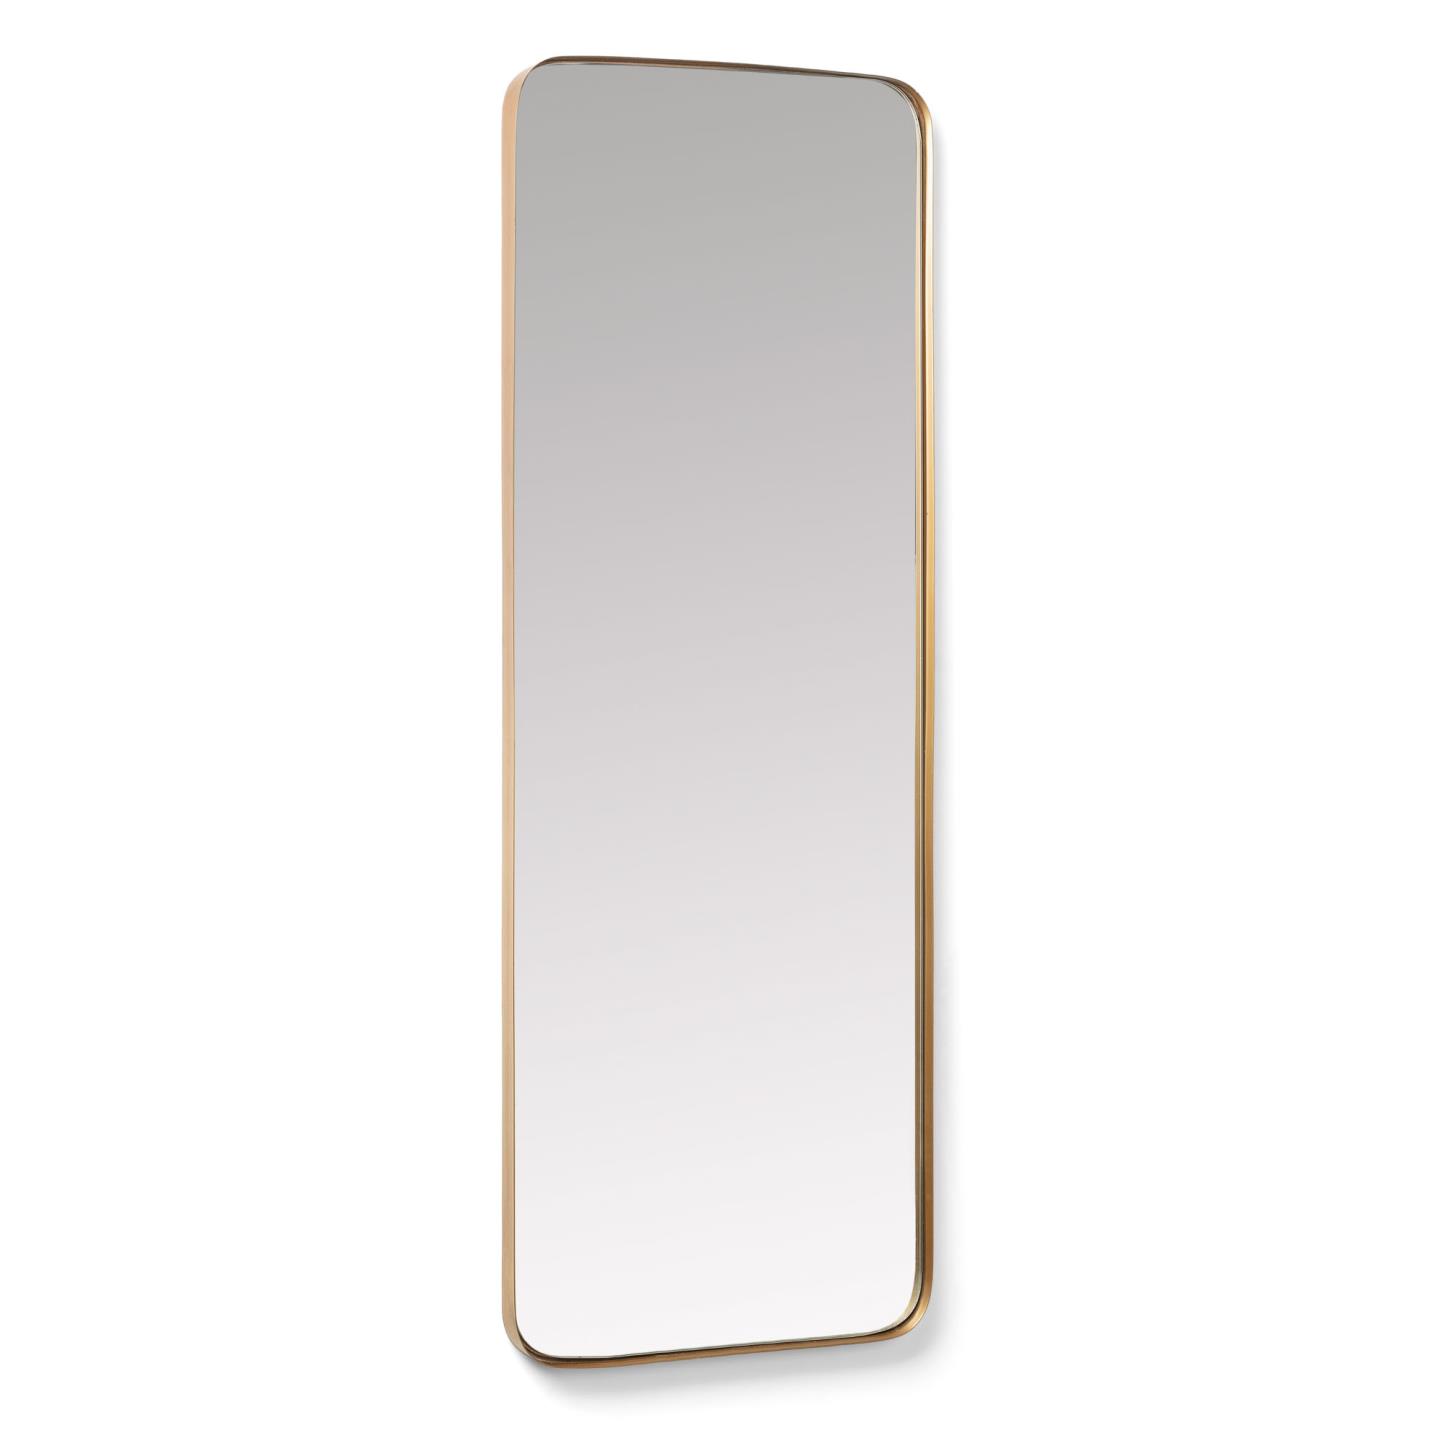 LAFORMA Marco vægspejl, rektangulær - spejlglas og guld stål (55x150,5)